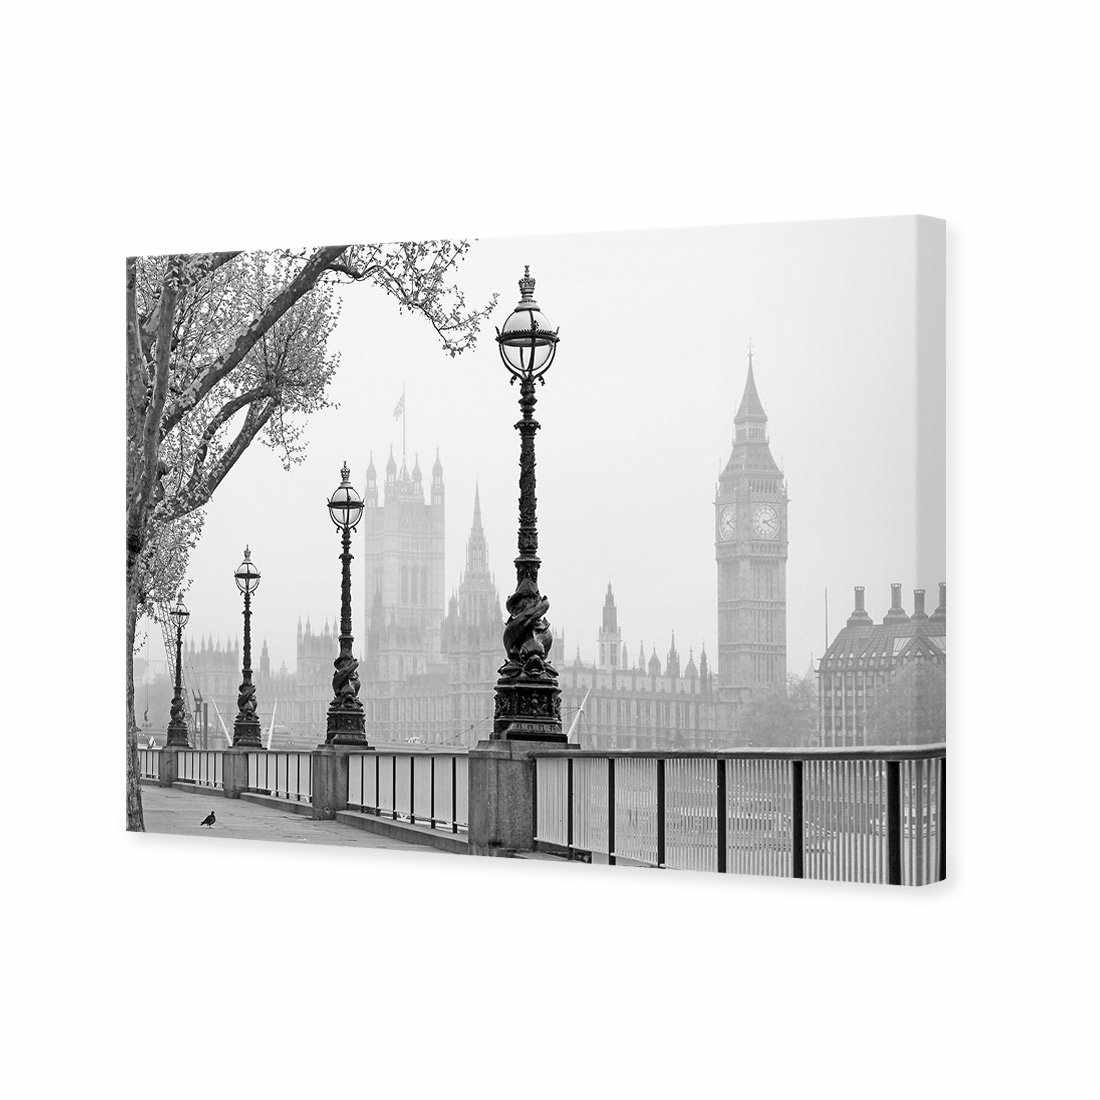 Misty London, B&W Canvas Art-Canvas-Wall Art Designs-45x30cm-Canvas - No Frame-Wall Art Designs